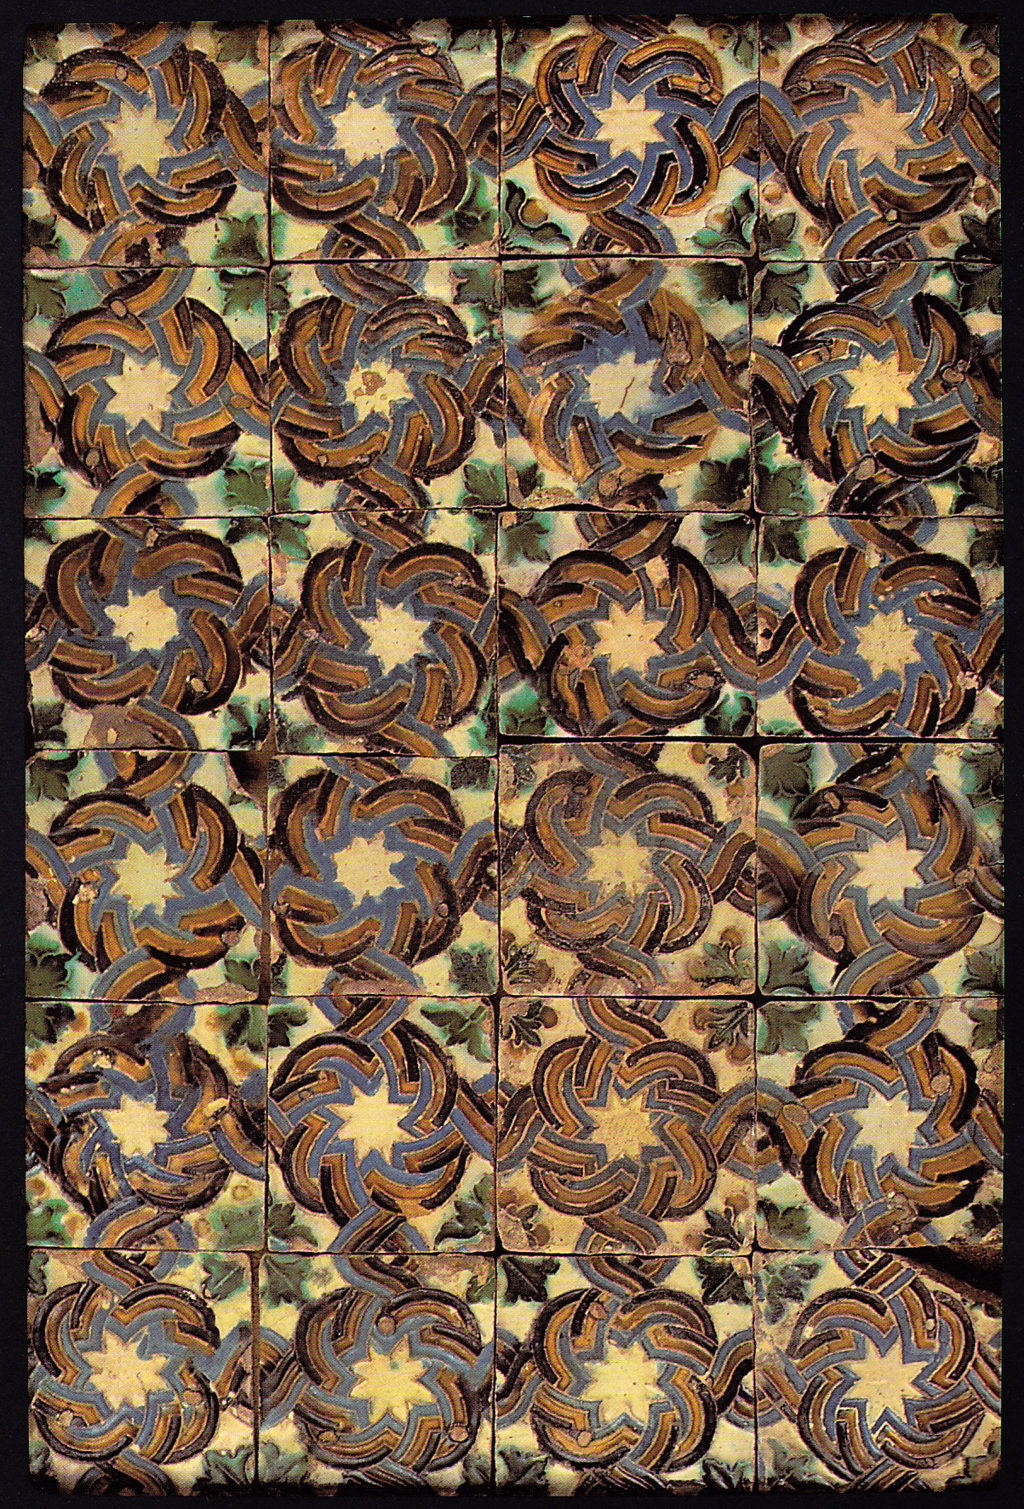 00389. Panel de azulejos de arista. Colección Carranza.